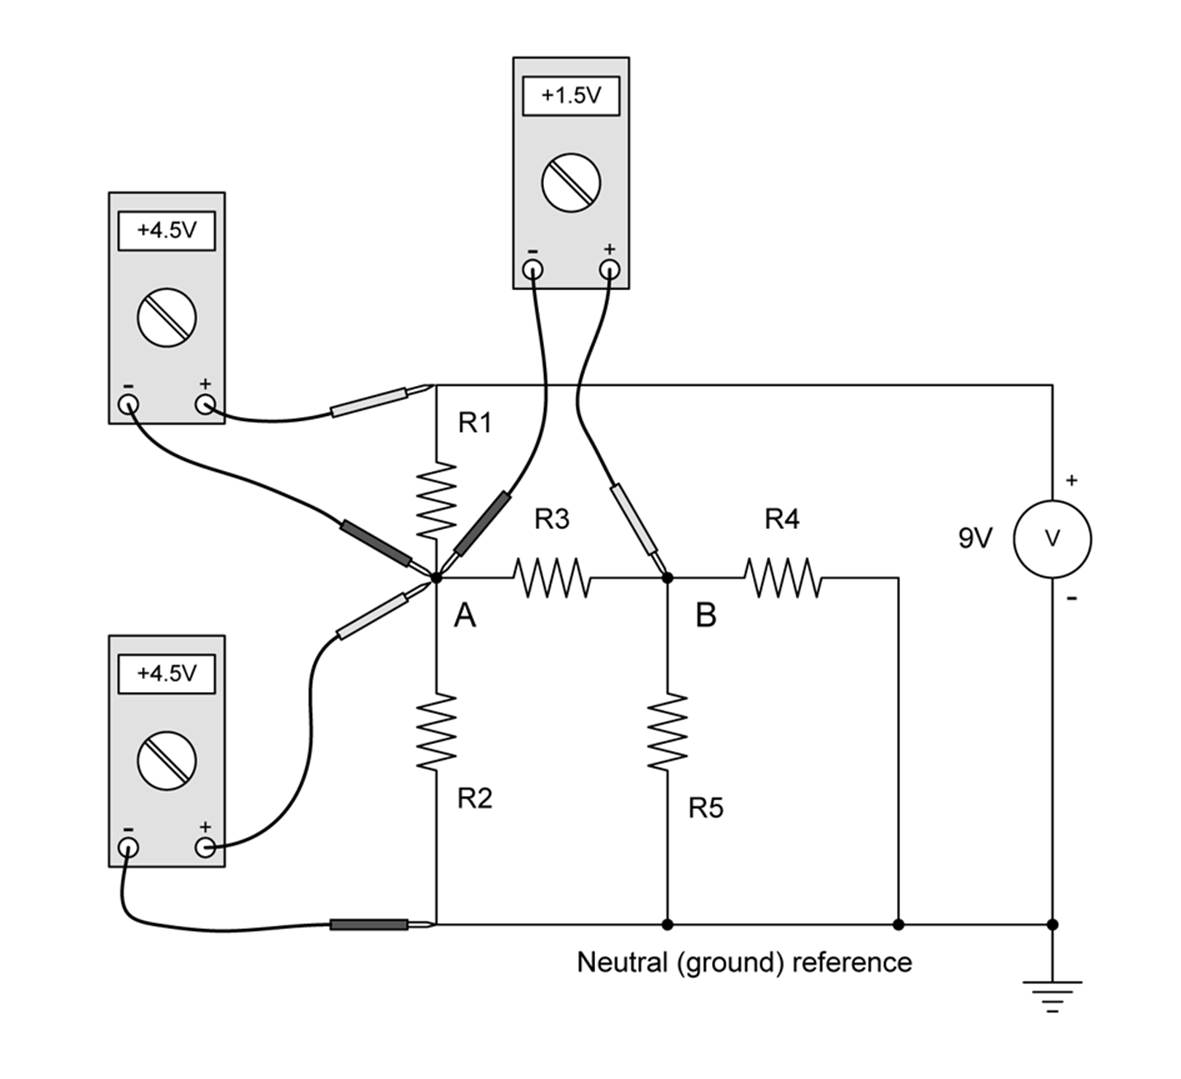 Voltage drops in a simple circuit